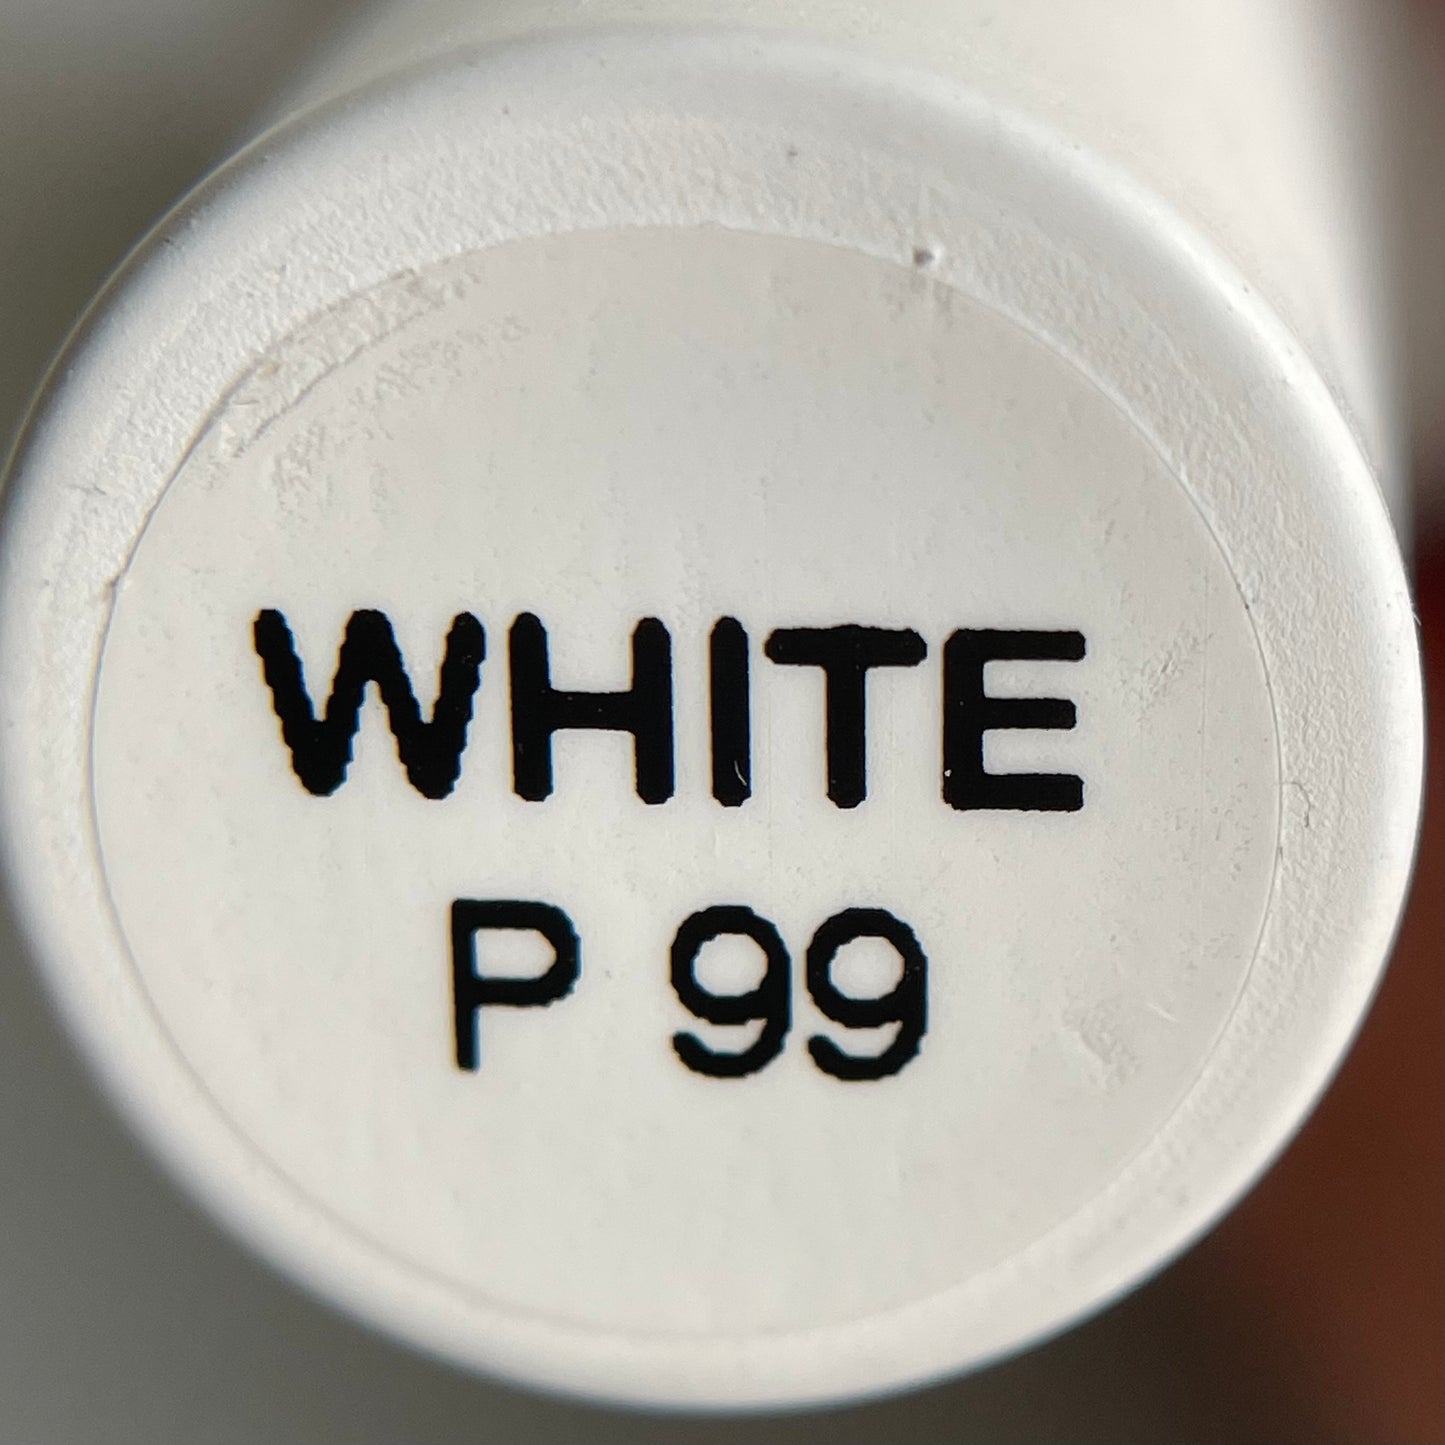 PLIY Gel Color P99, white (10 g)